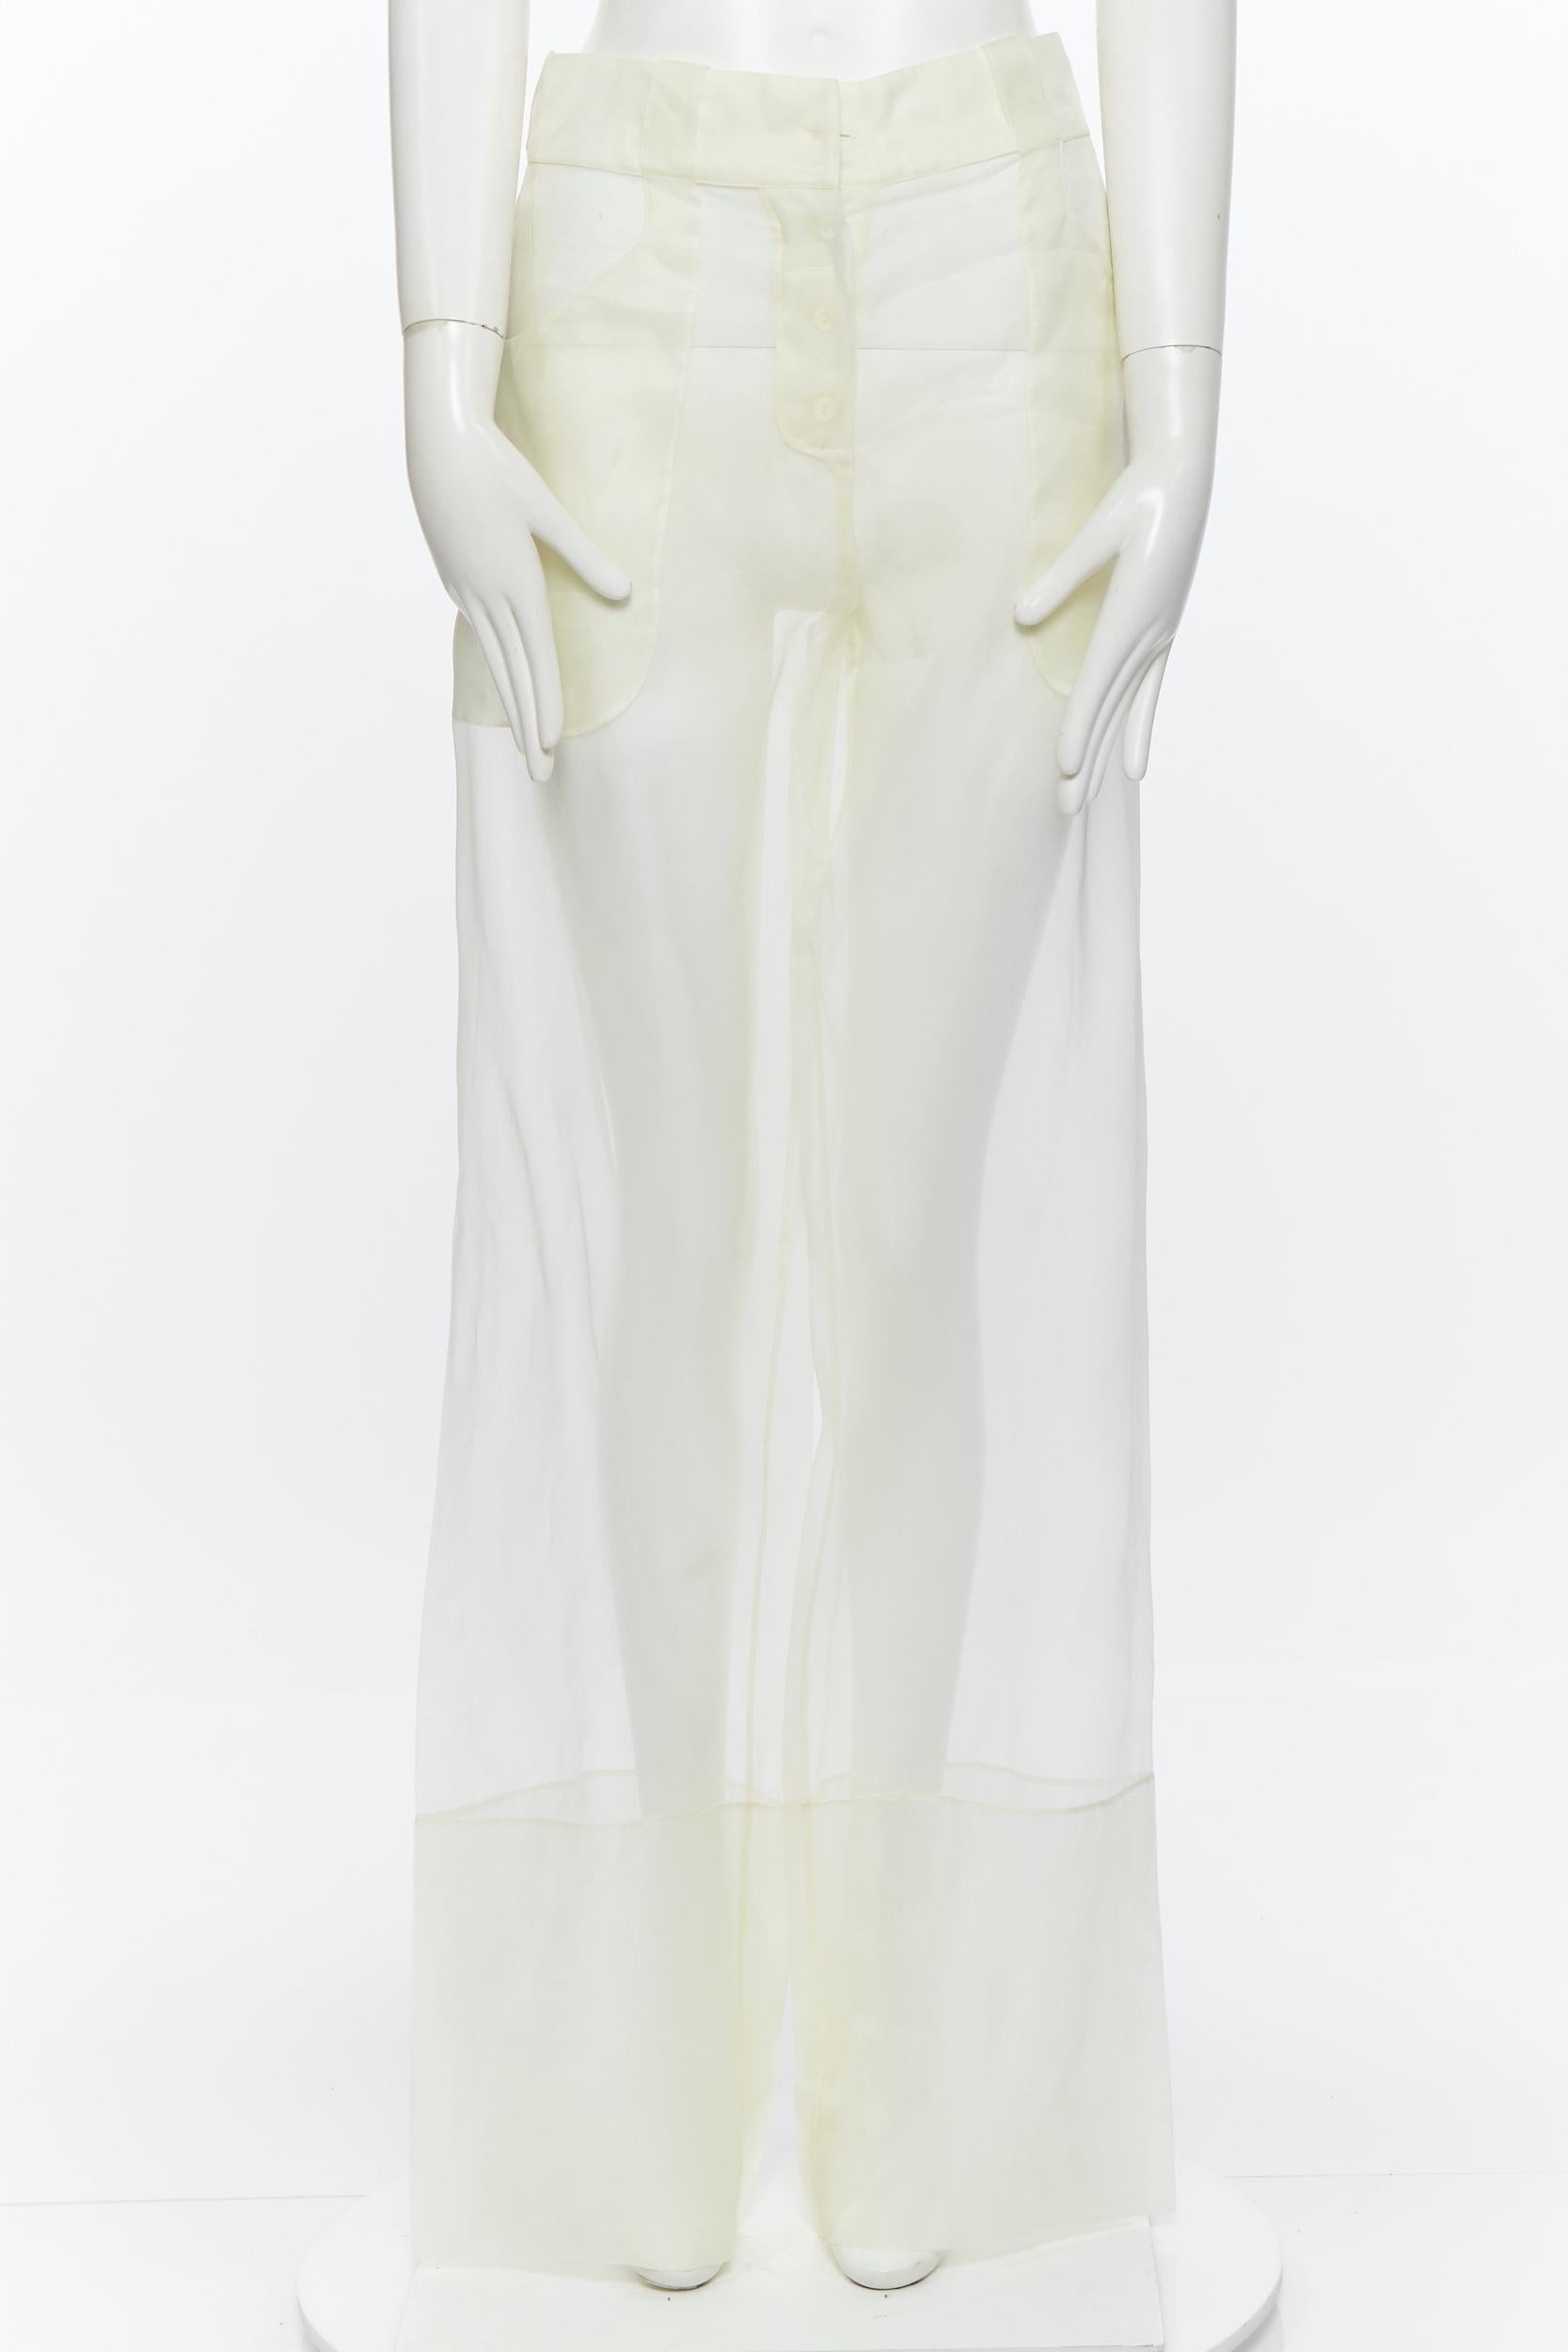 new LA PERLA SS15 Runway silk organza high waisted sheer wide leg pants IT40 S
Brand: La Perla
Collection: Spring Summer 2015
As seen on: Kim Kardashian in Las Vegas
Model Name / Style: Sheer pants
Material: Silk
Color: Beige
Pattern: Solid
Closure: